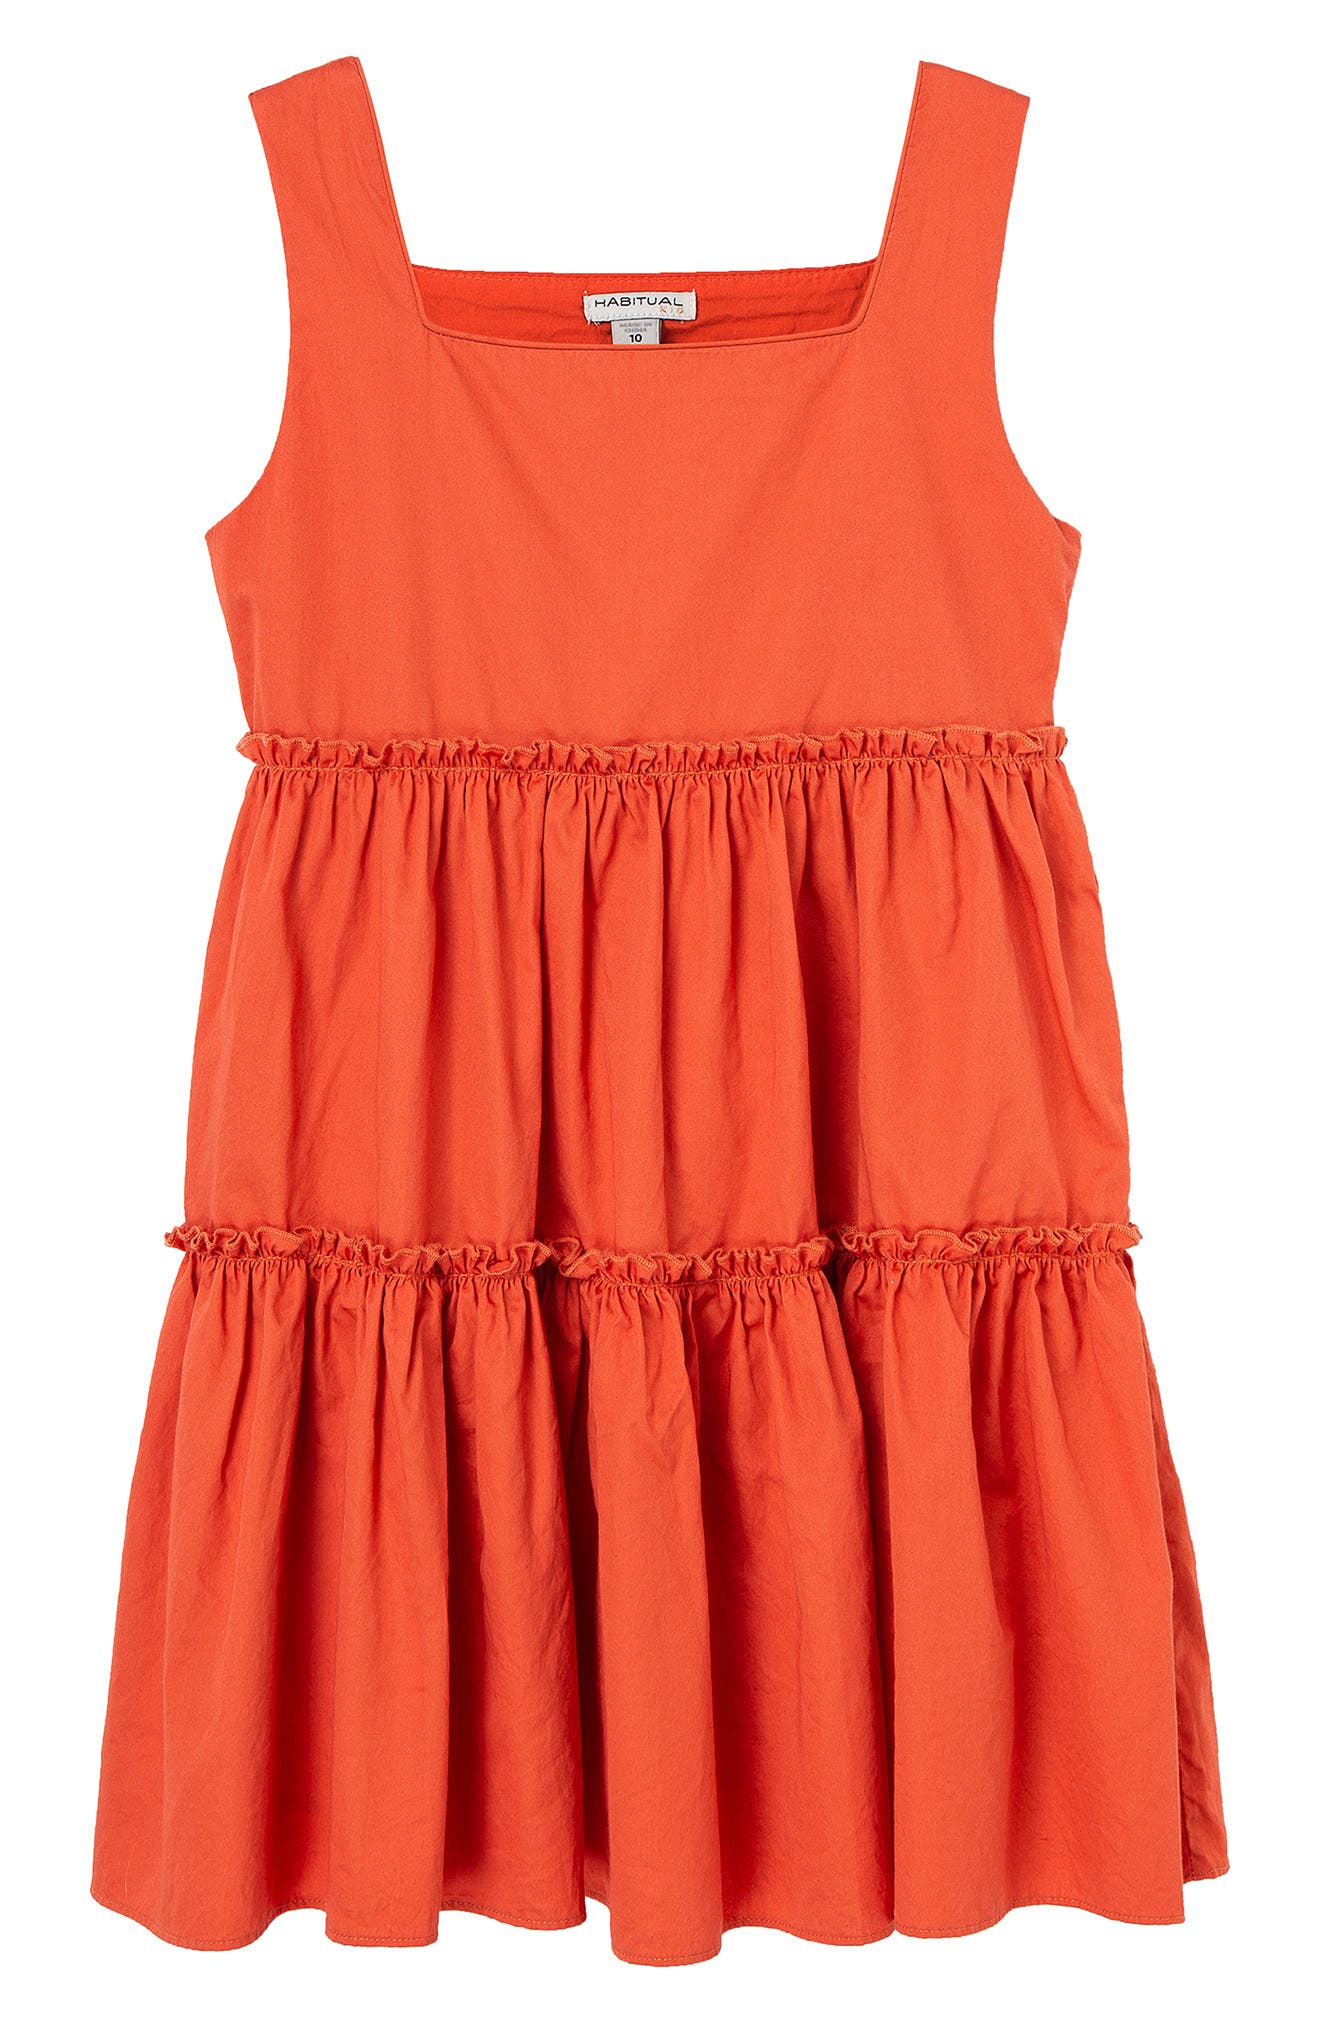 Girls' Orange Dresses ☀ Rompers | Nordstrom